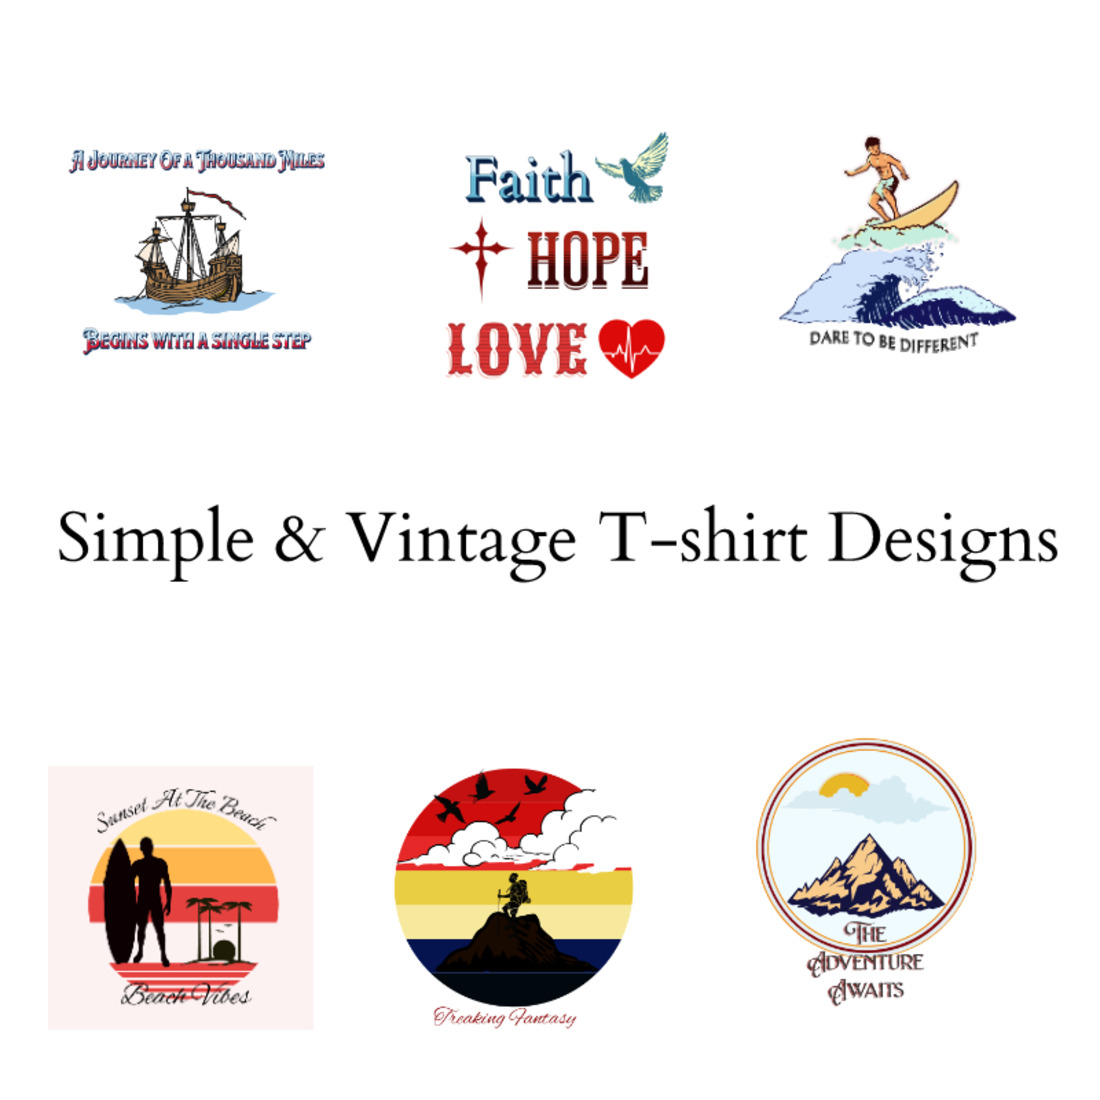 Simple & Vintage T-shirt Designs cover image.